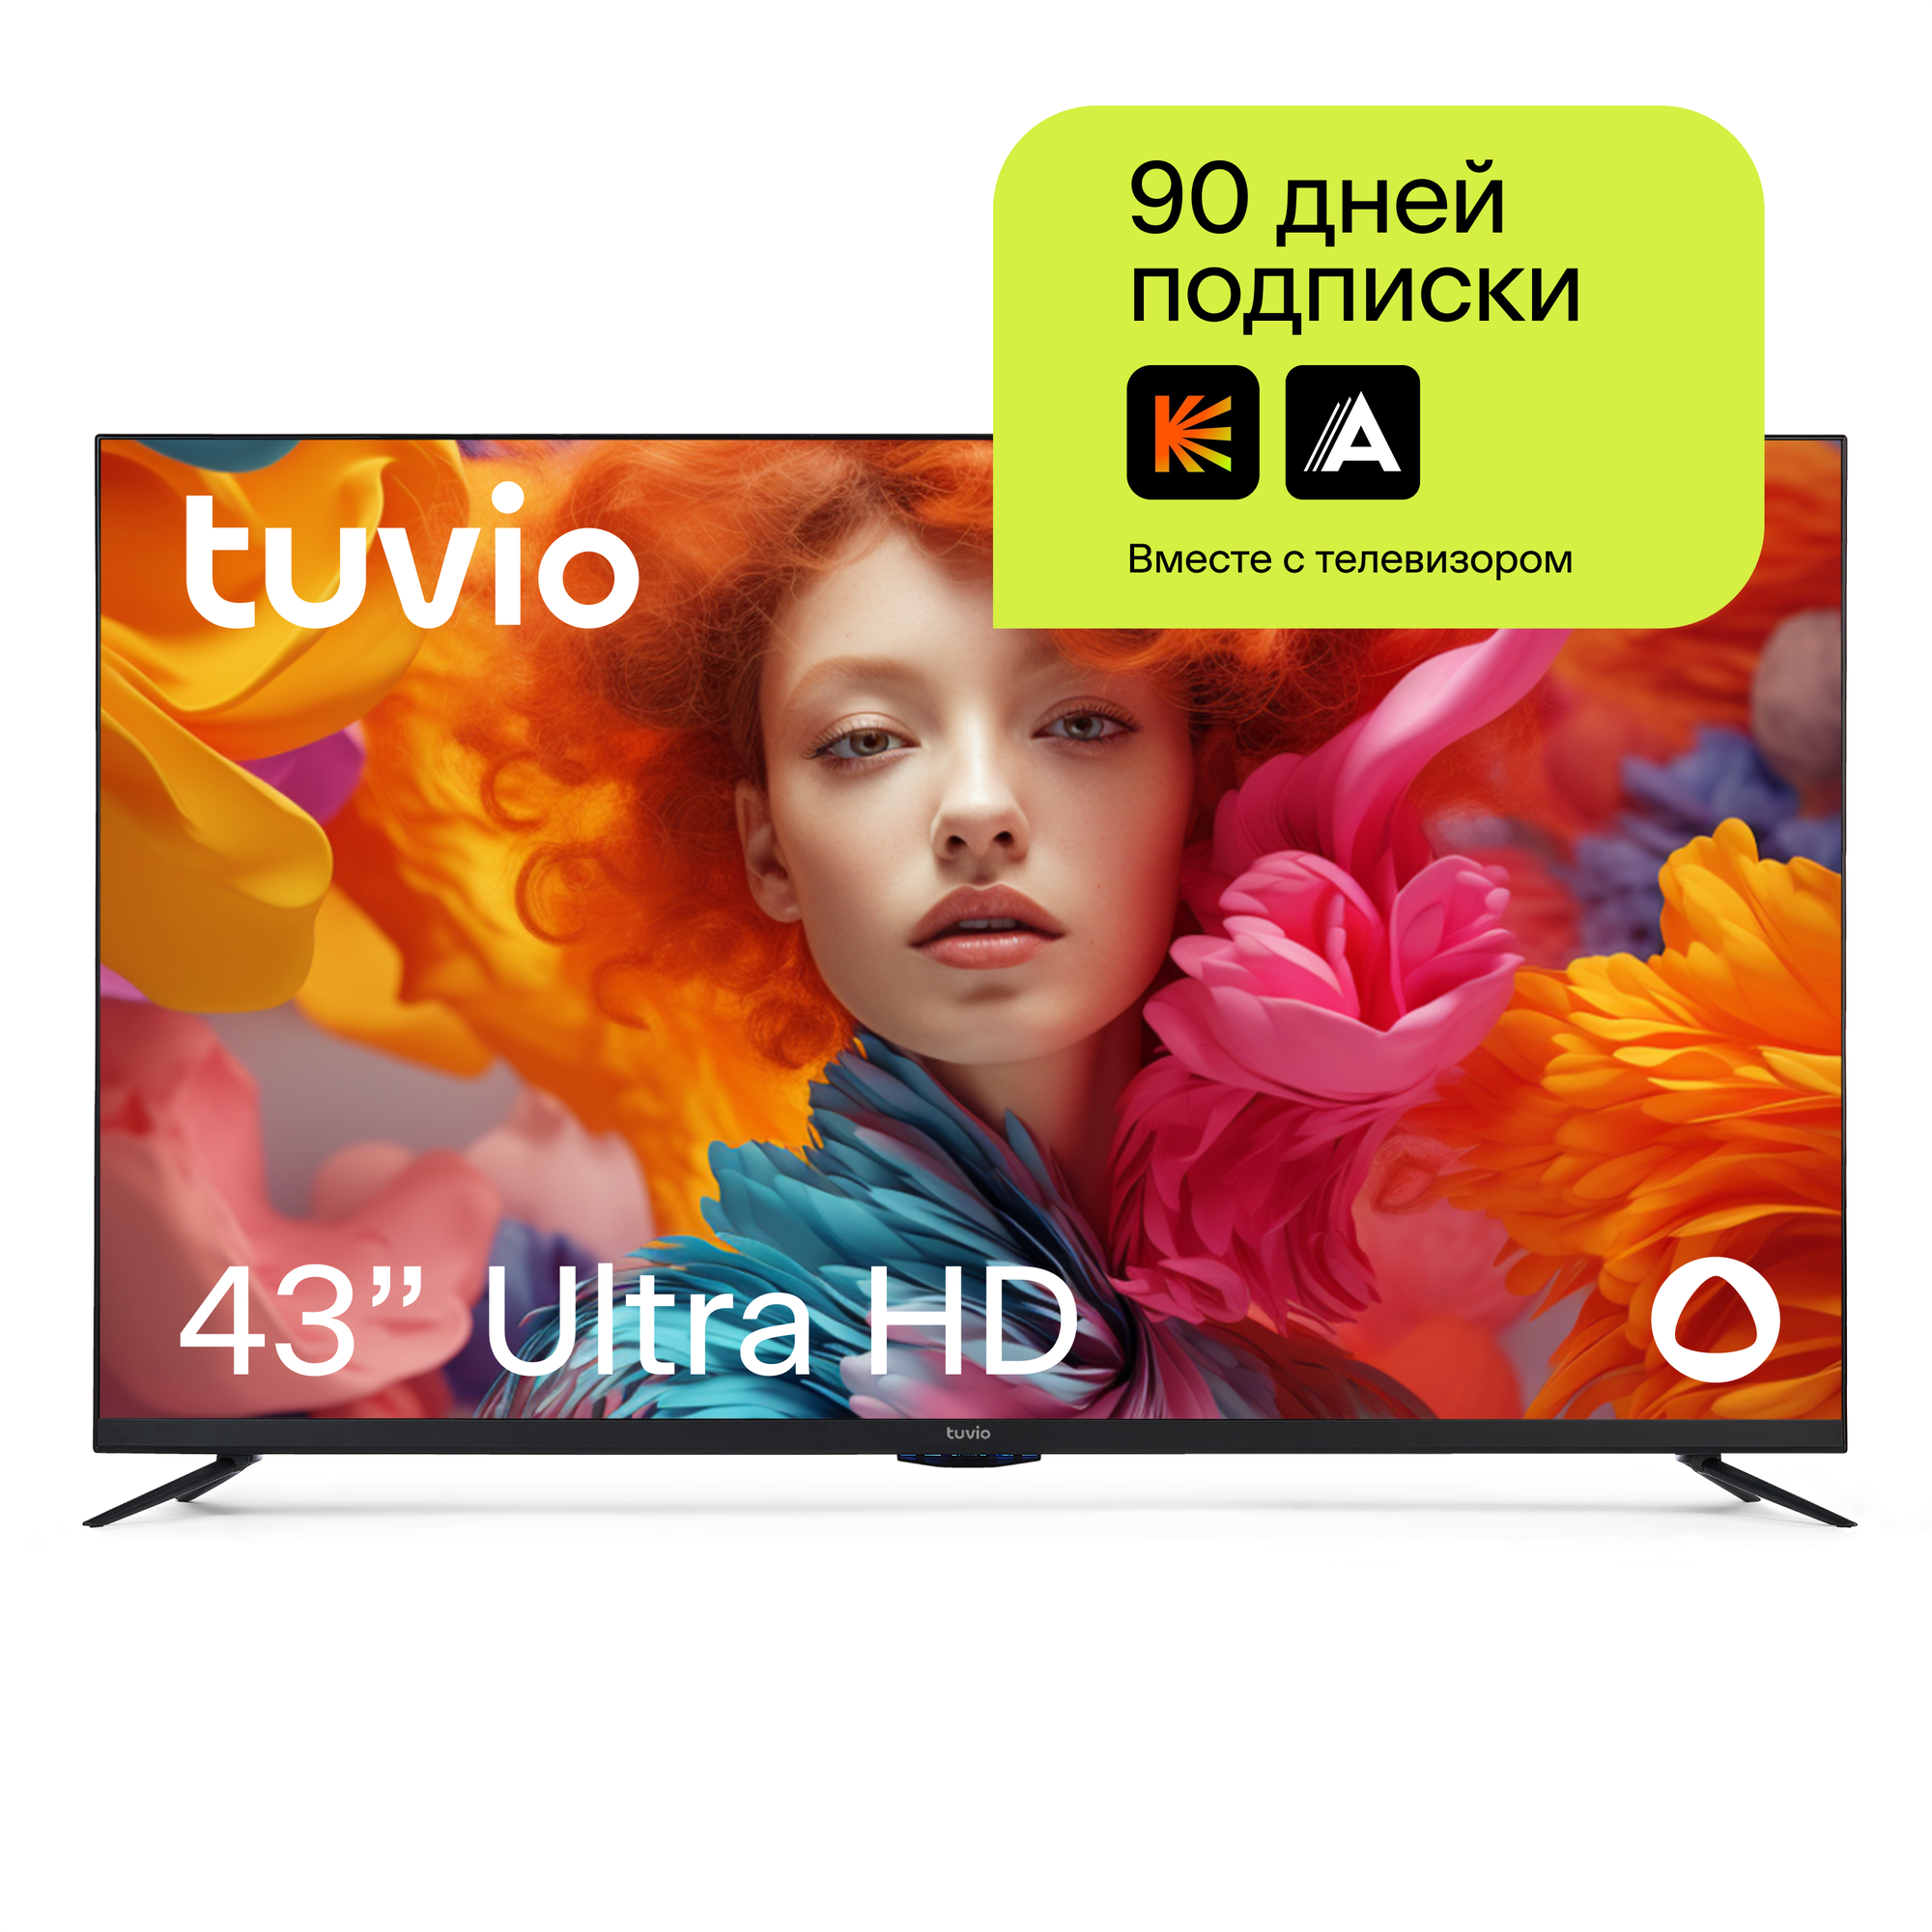 43” Телевизор Tuvio 4К ULTRA HD DLED на платформе Яндекс.ТВ STV-43FDUBK1R черный